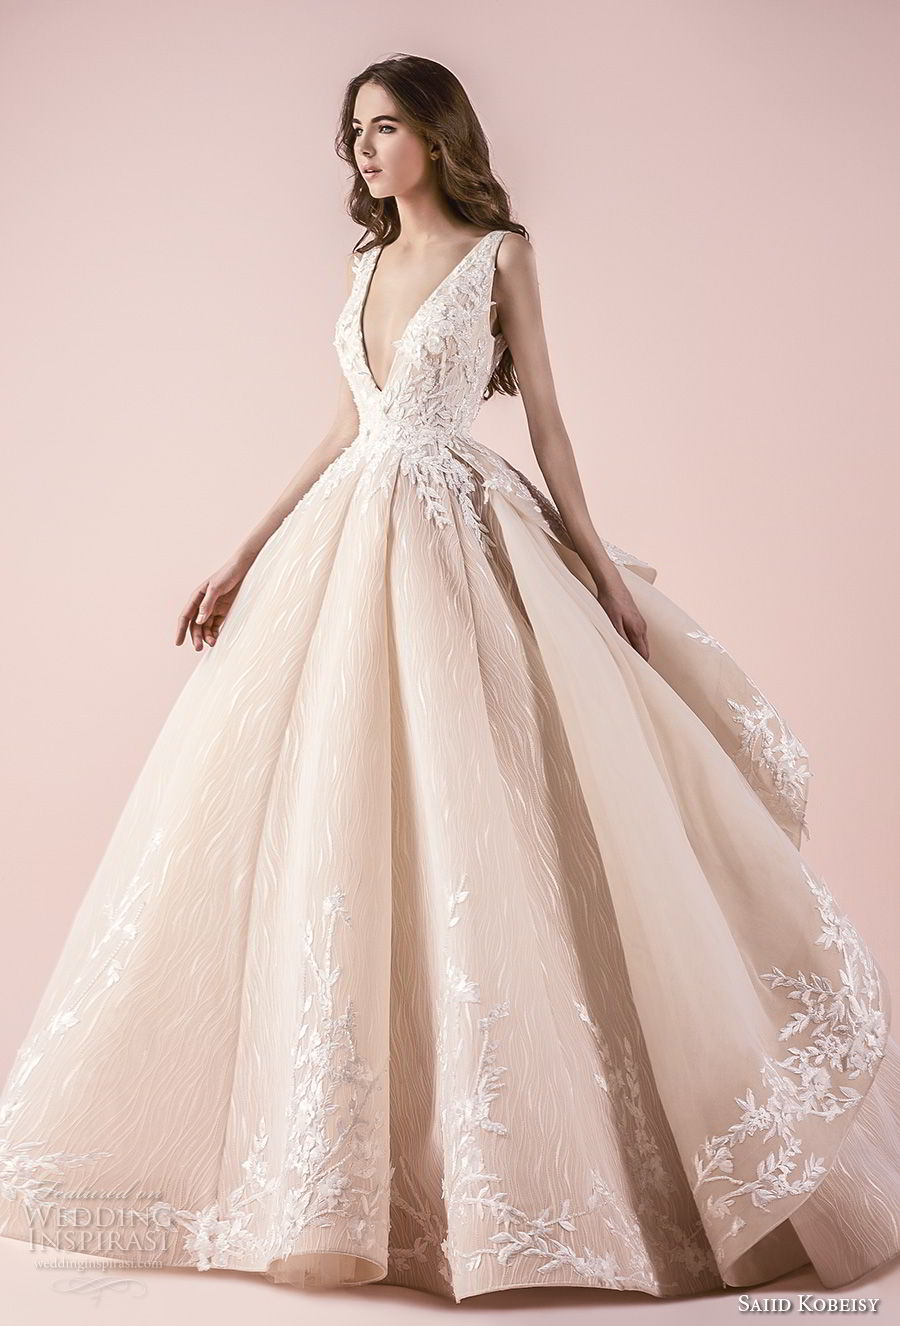 saiid kobeisy 2018 bridal sleeveless deep v neck heavily embellished bodice romanitc princess blush color ball gown wedding dress (3258) mv